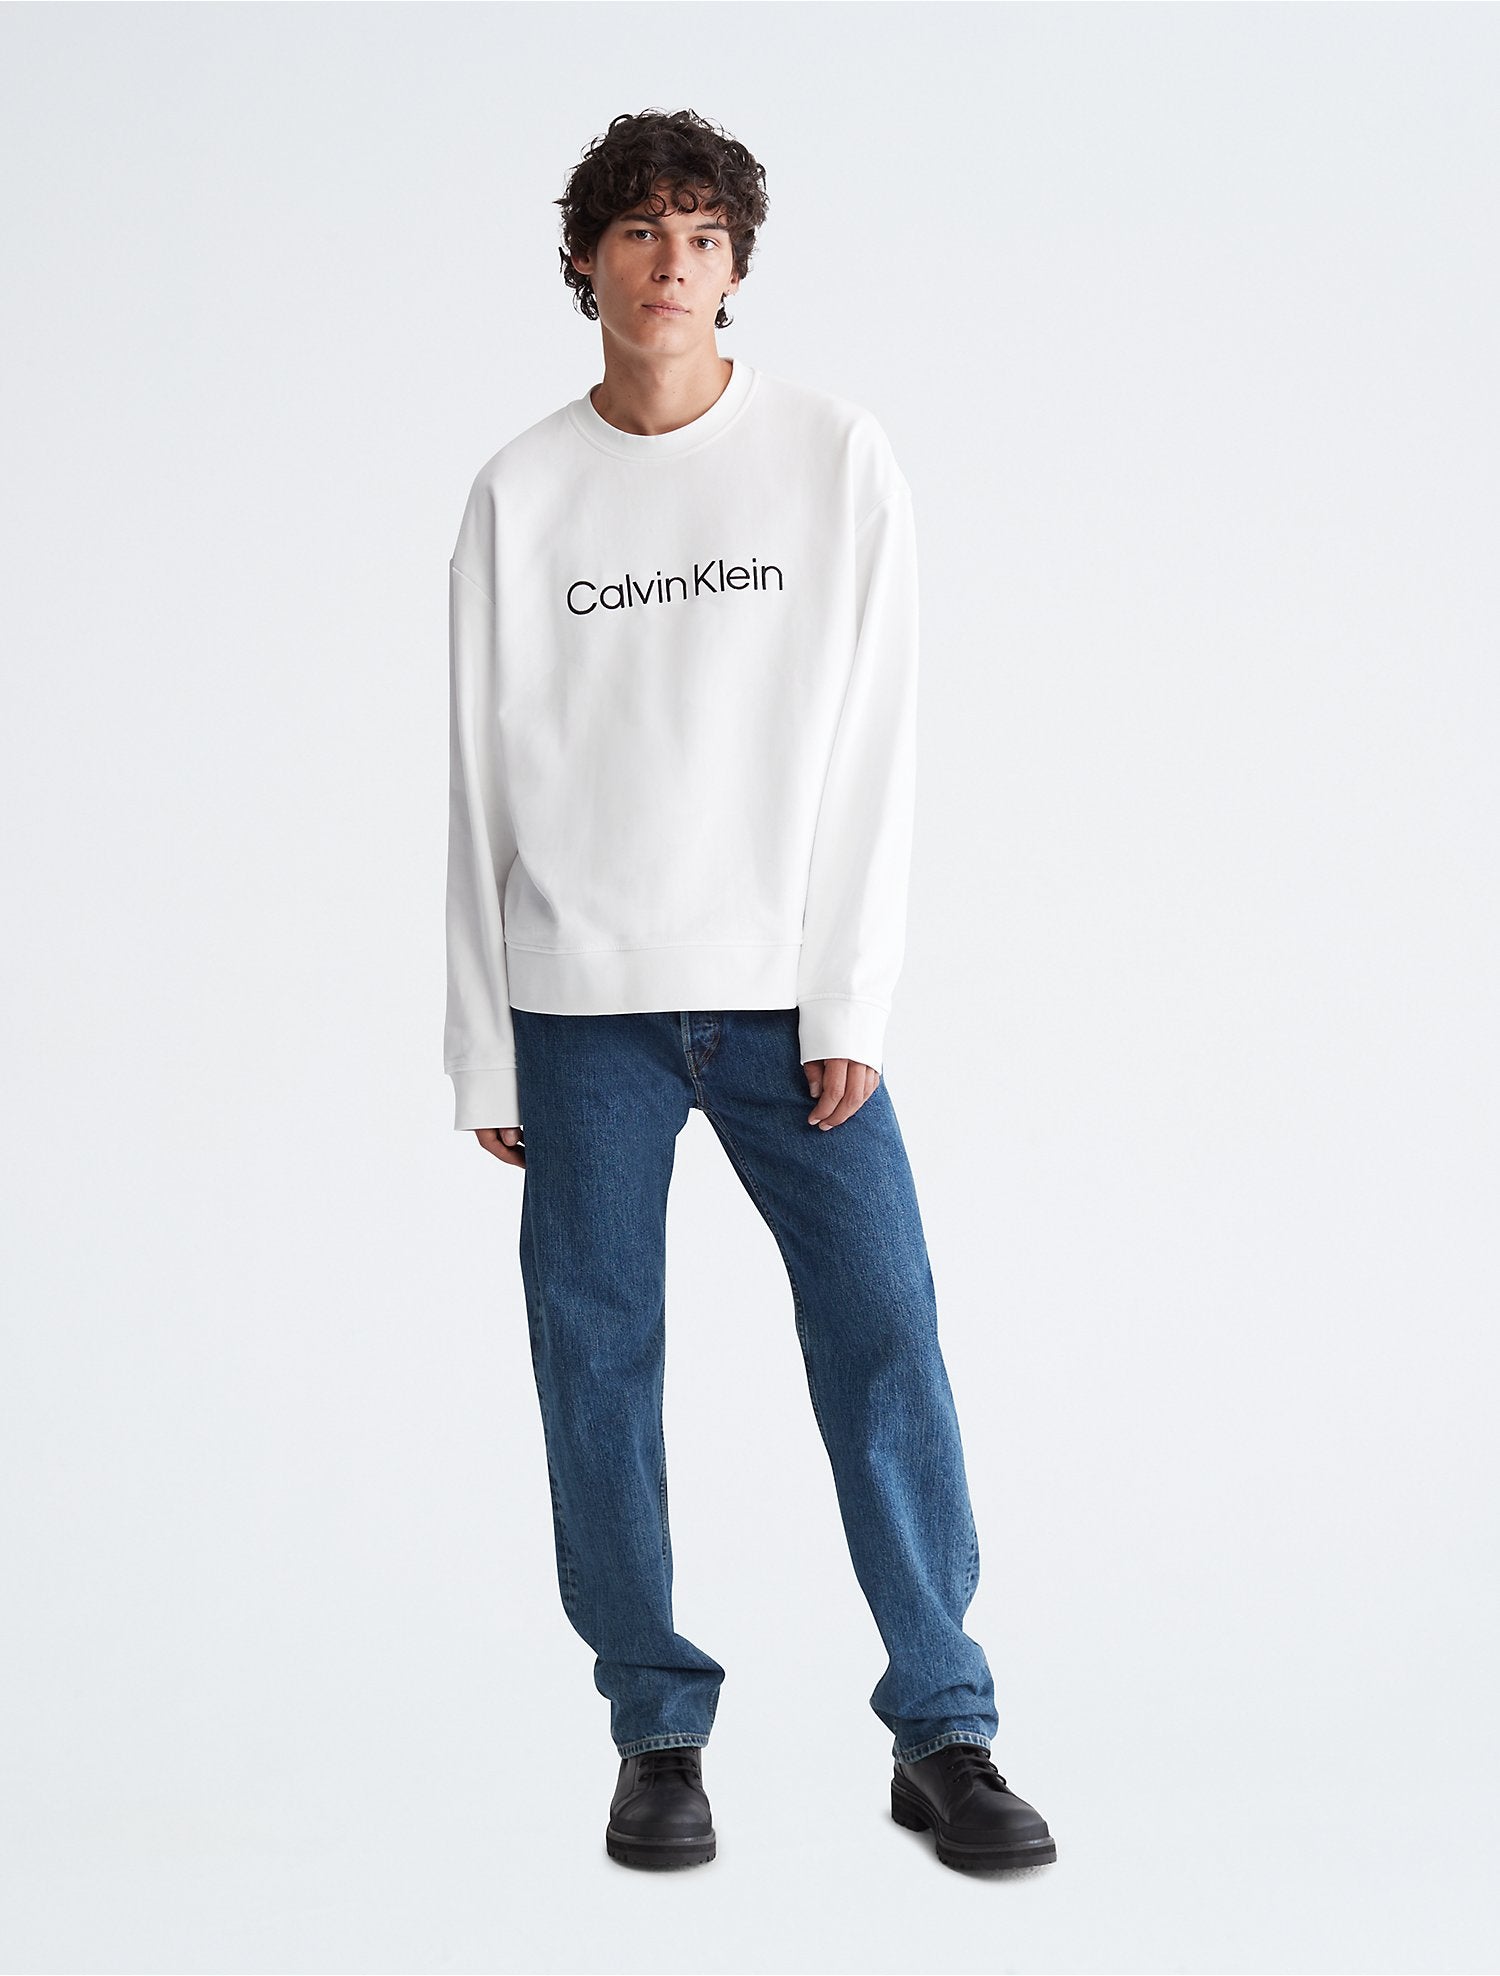 Calvin Klein Relaxed Fit Standard Logo Crewneck Sweatshirt - Men